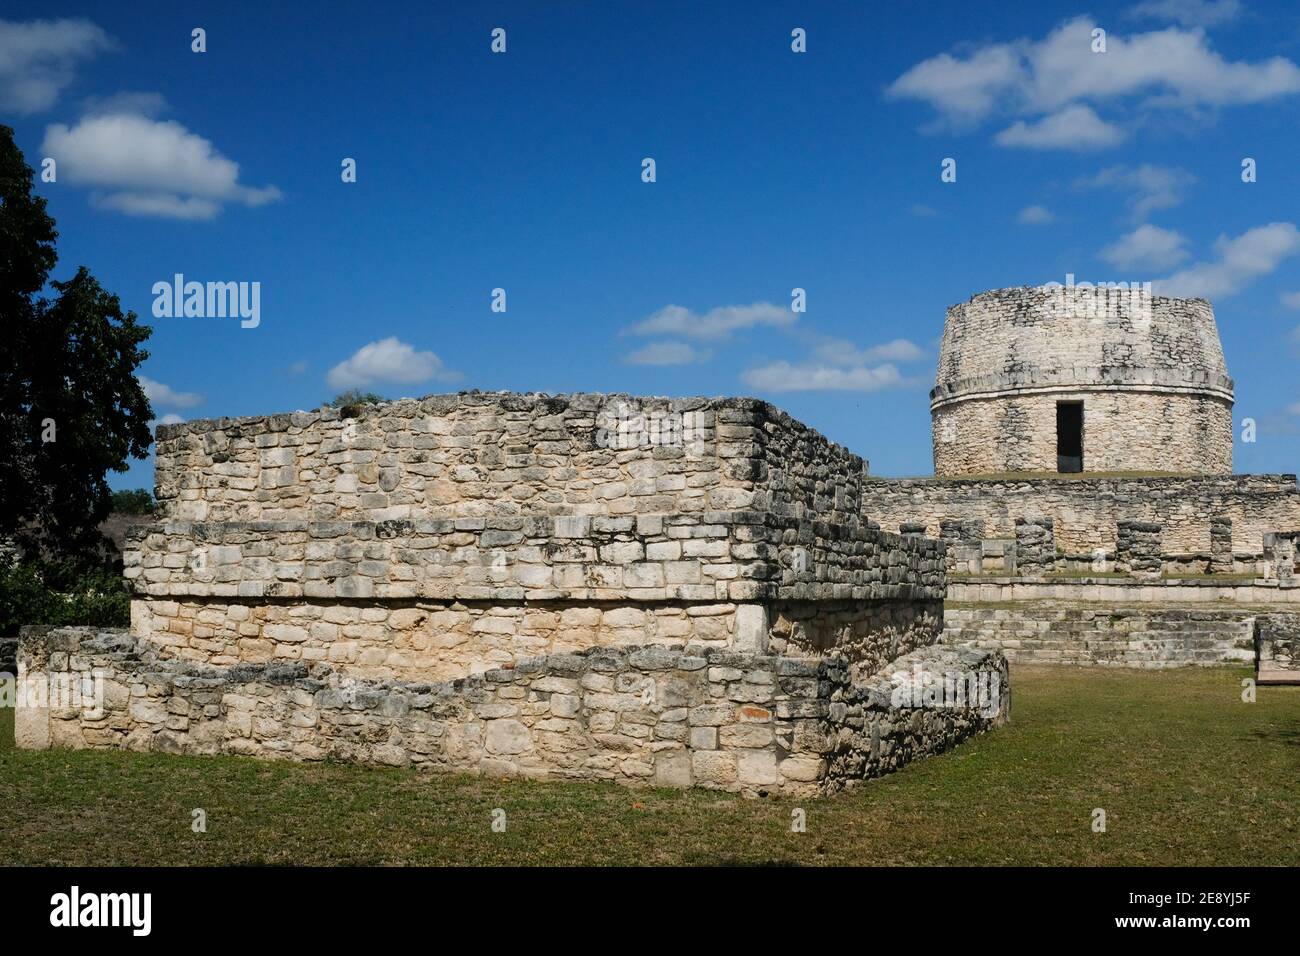 The Pre-Columbian Mayan site of Mayapan, Yucatan Mexico Stock Photo